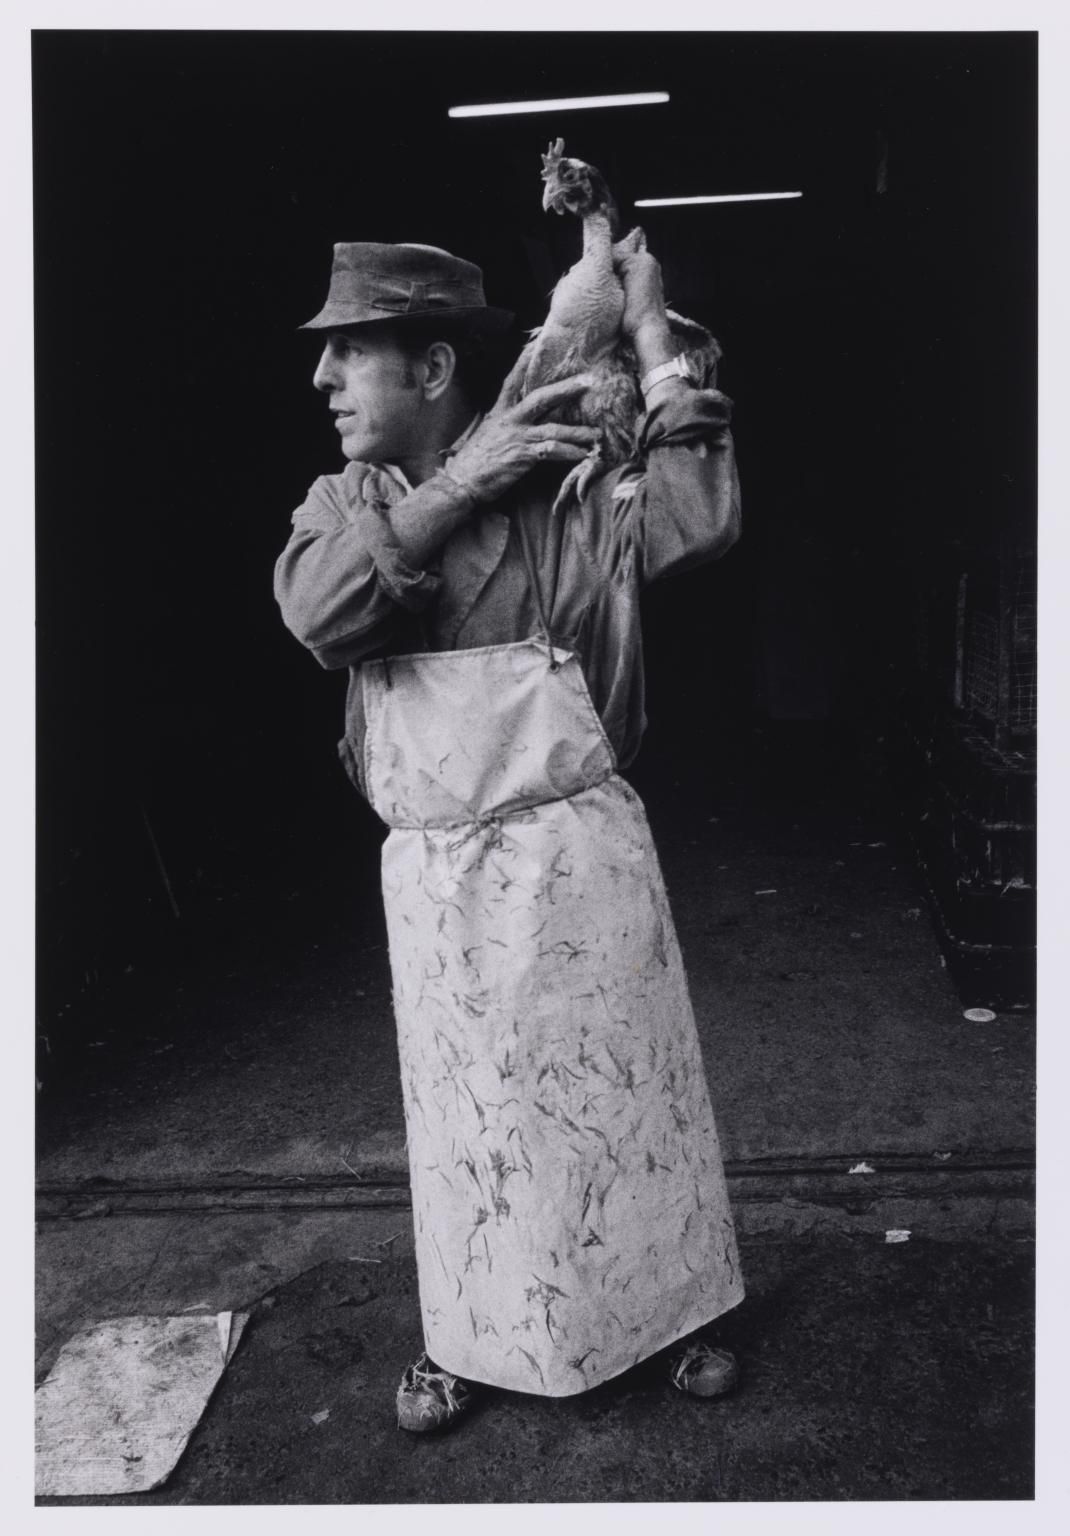 Markéta Luskačová: Man with the chicken, Leyden Street, London, 1976